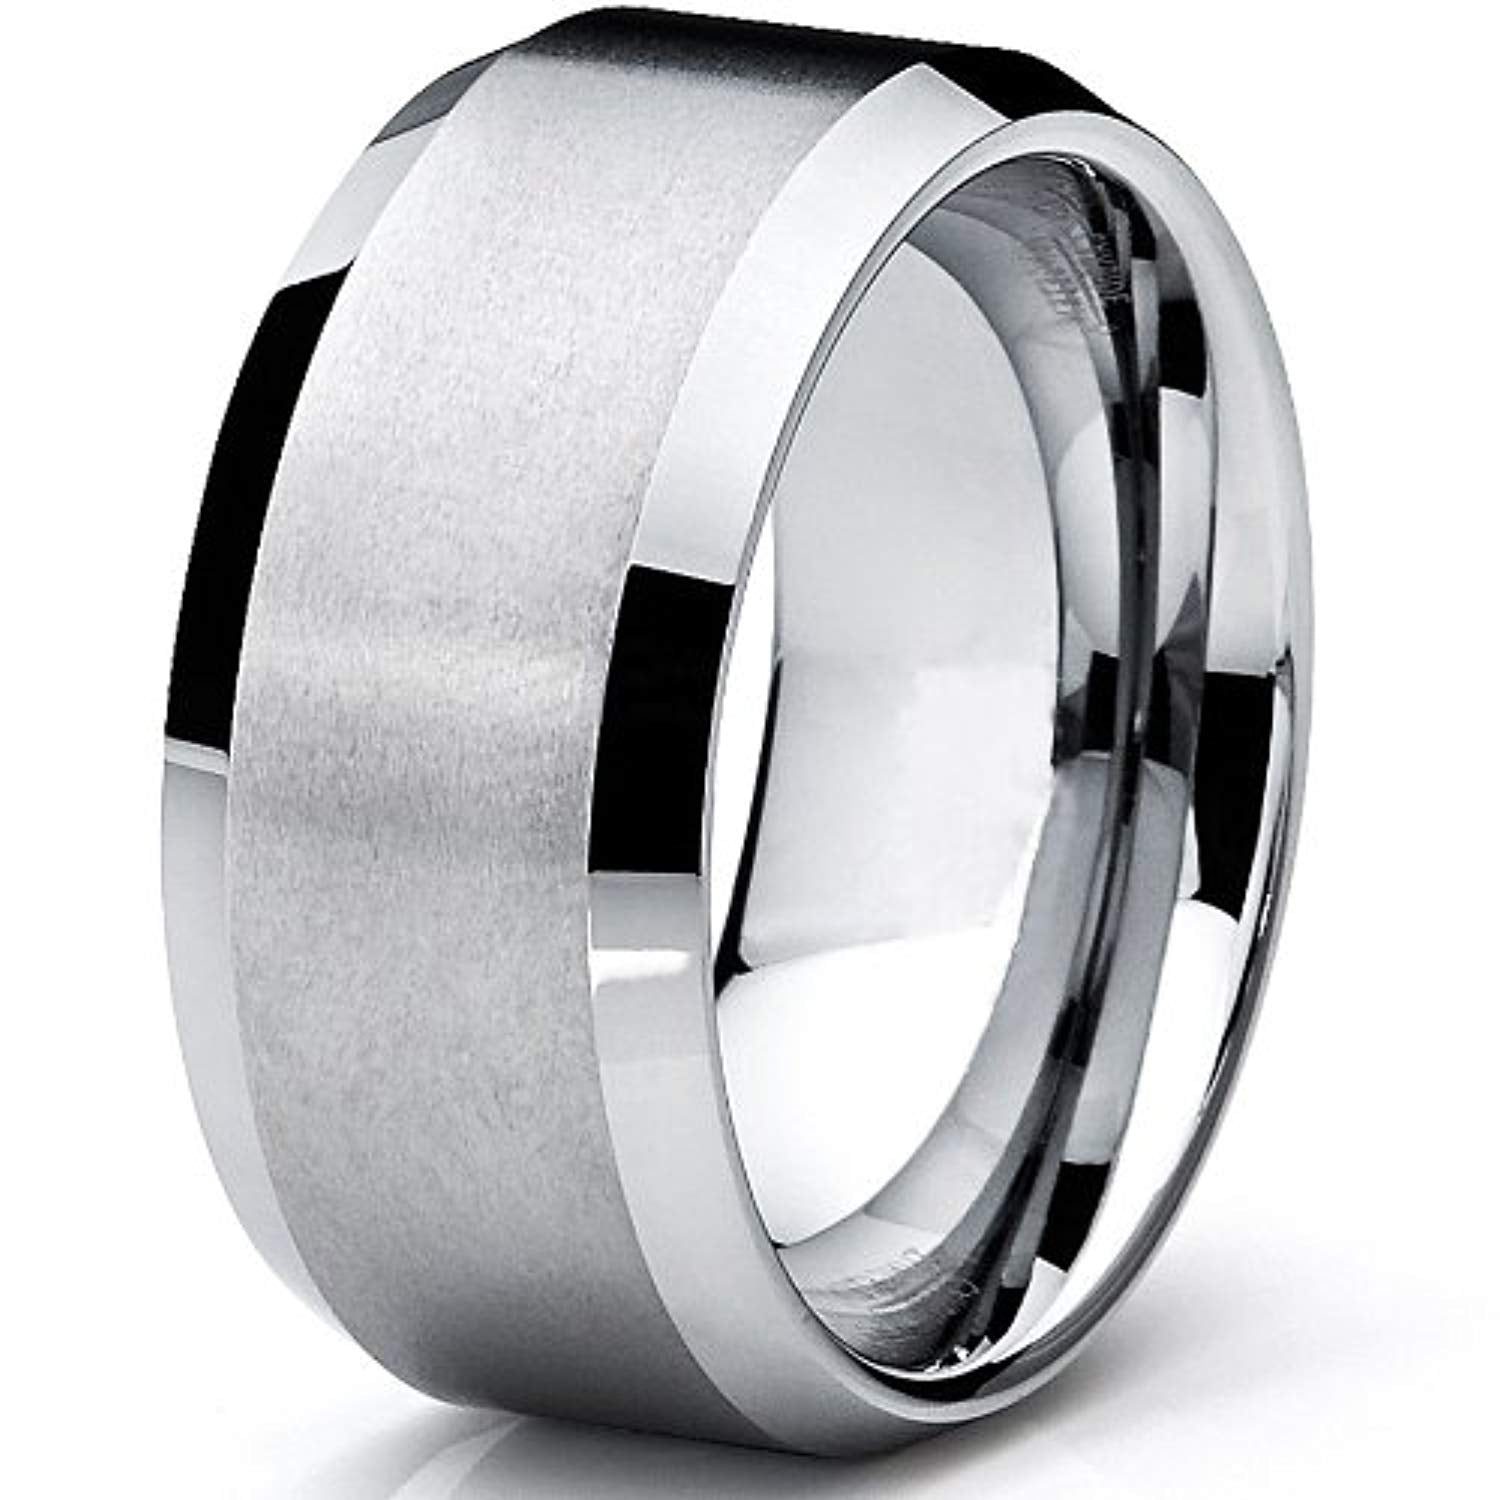 10MM Men's Brushed Tungsten Carbide Wedding Band Ring